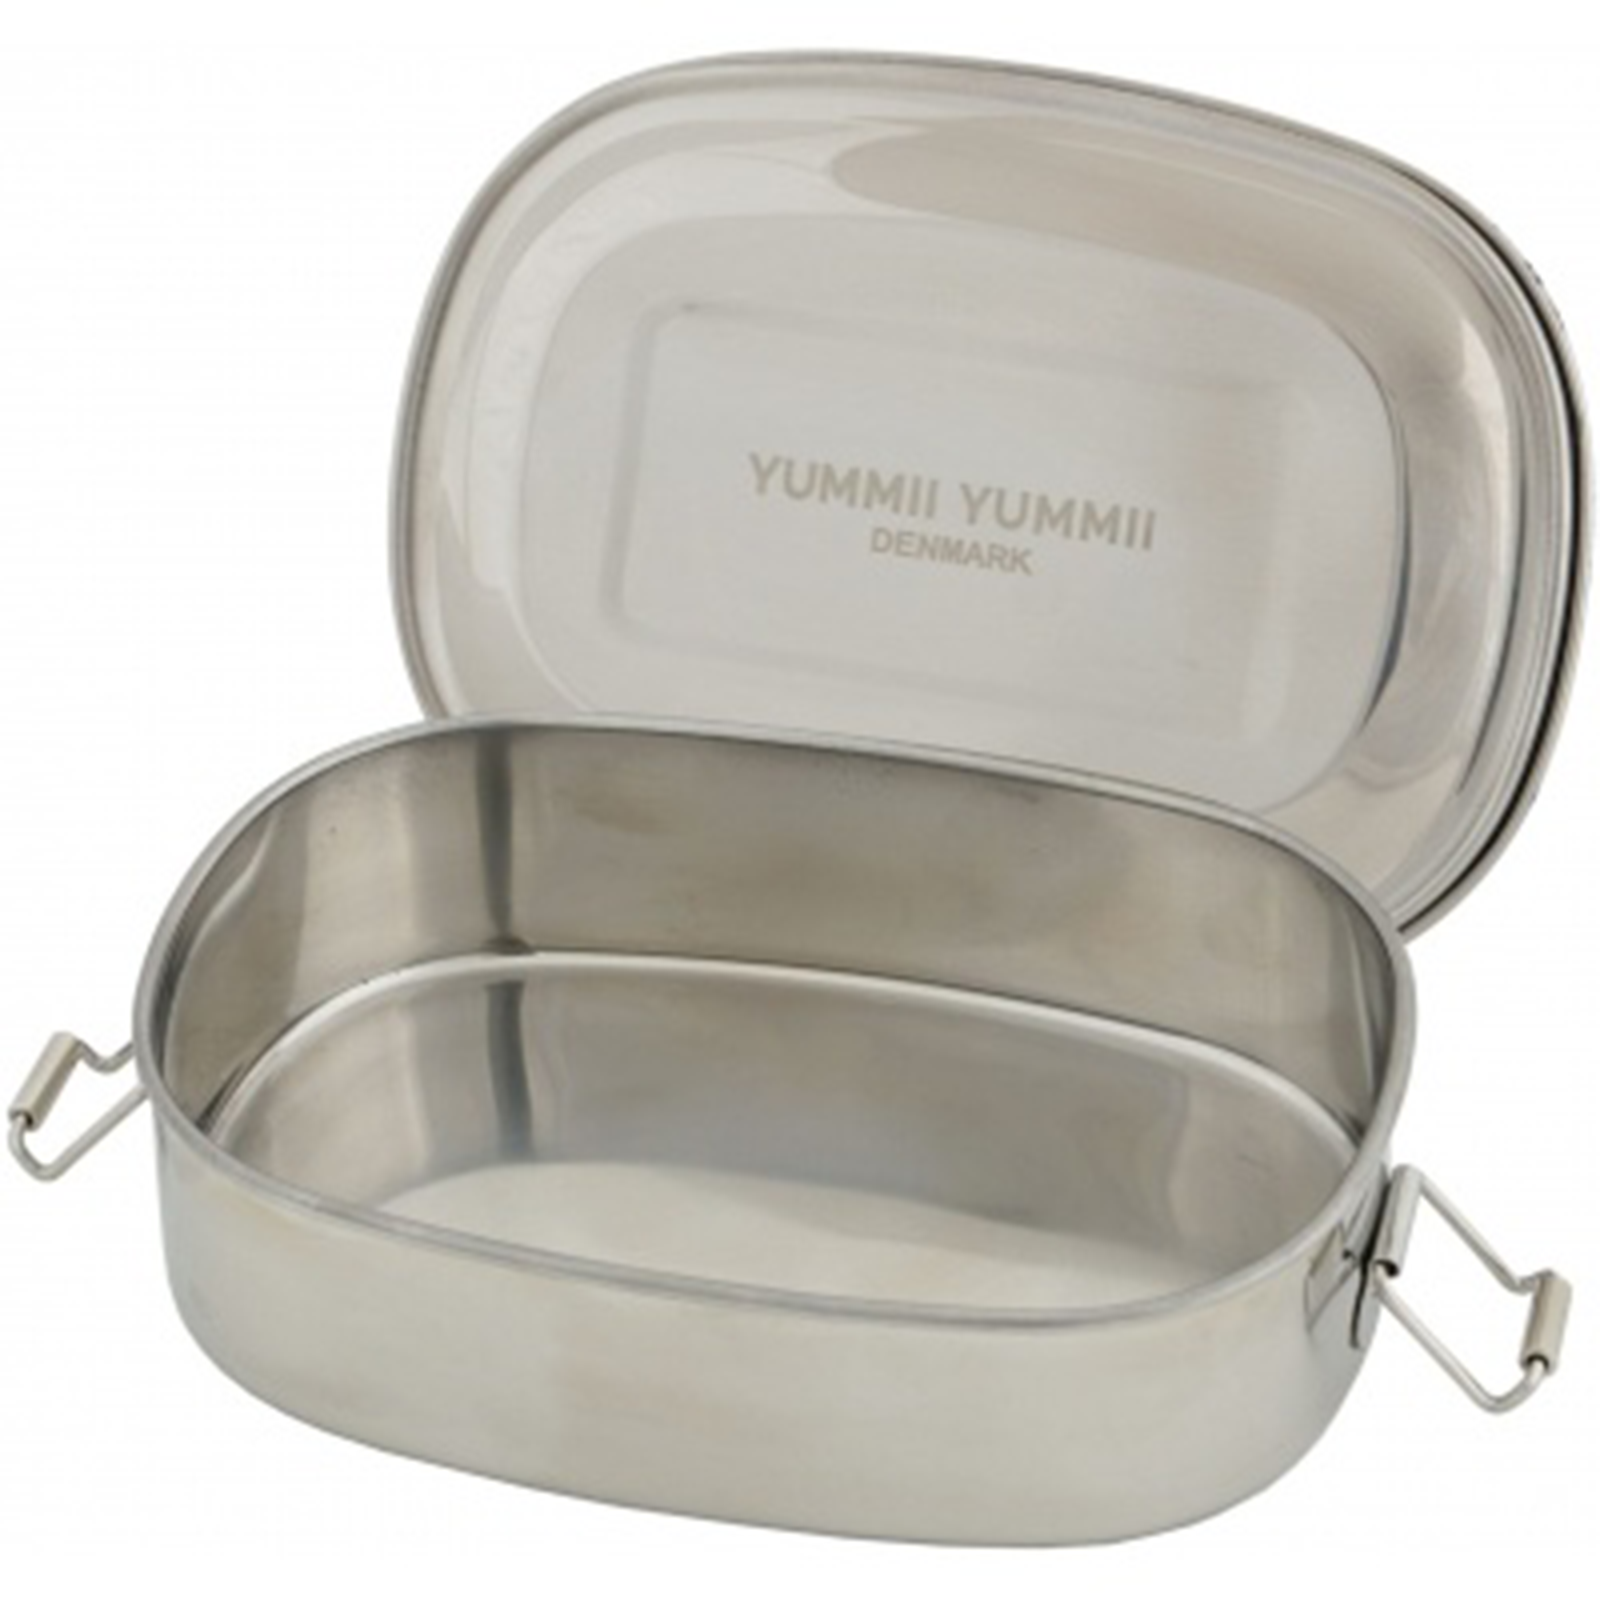 Yummii Yummii Bento Lunchbox klein 1 Edelstahl